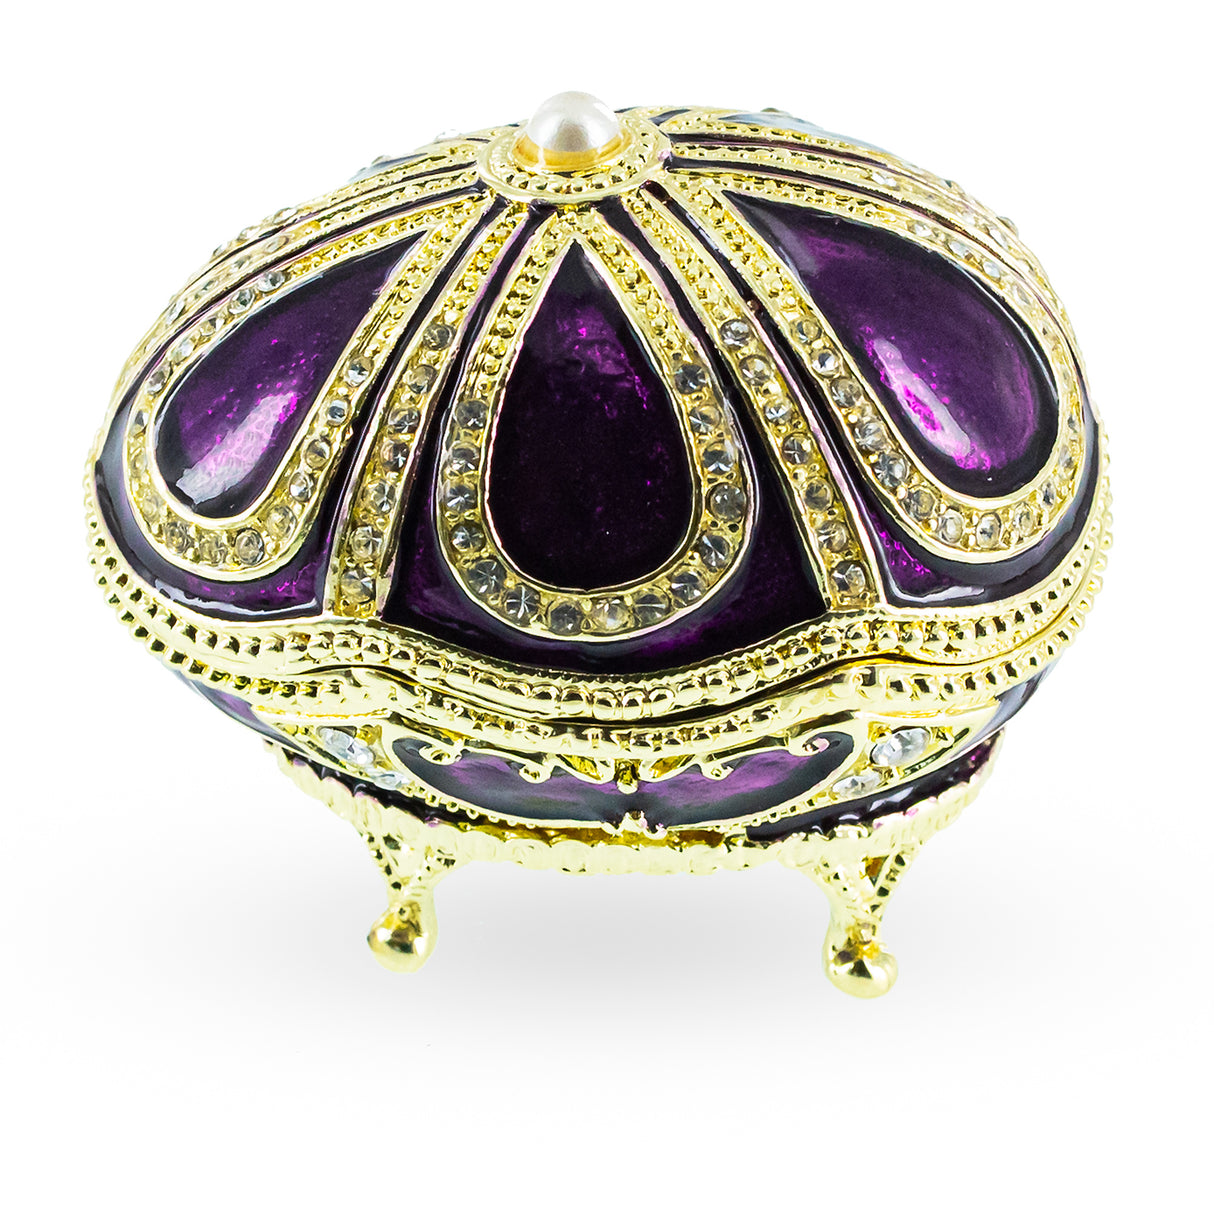 Bejeweled Purple Enamel Egg Figurine with Clock in Purple color, Oval shape